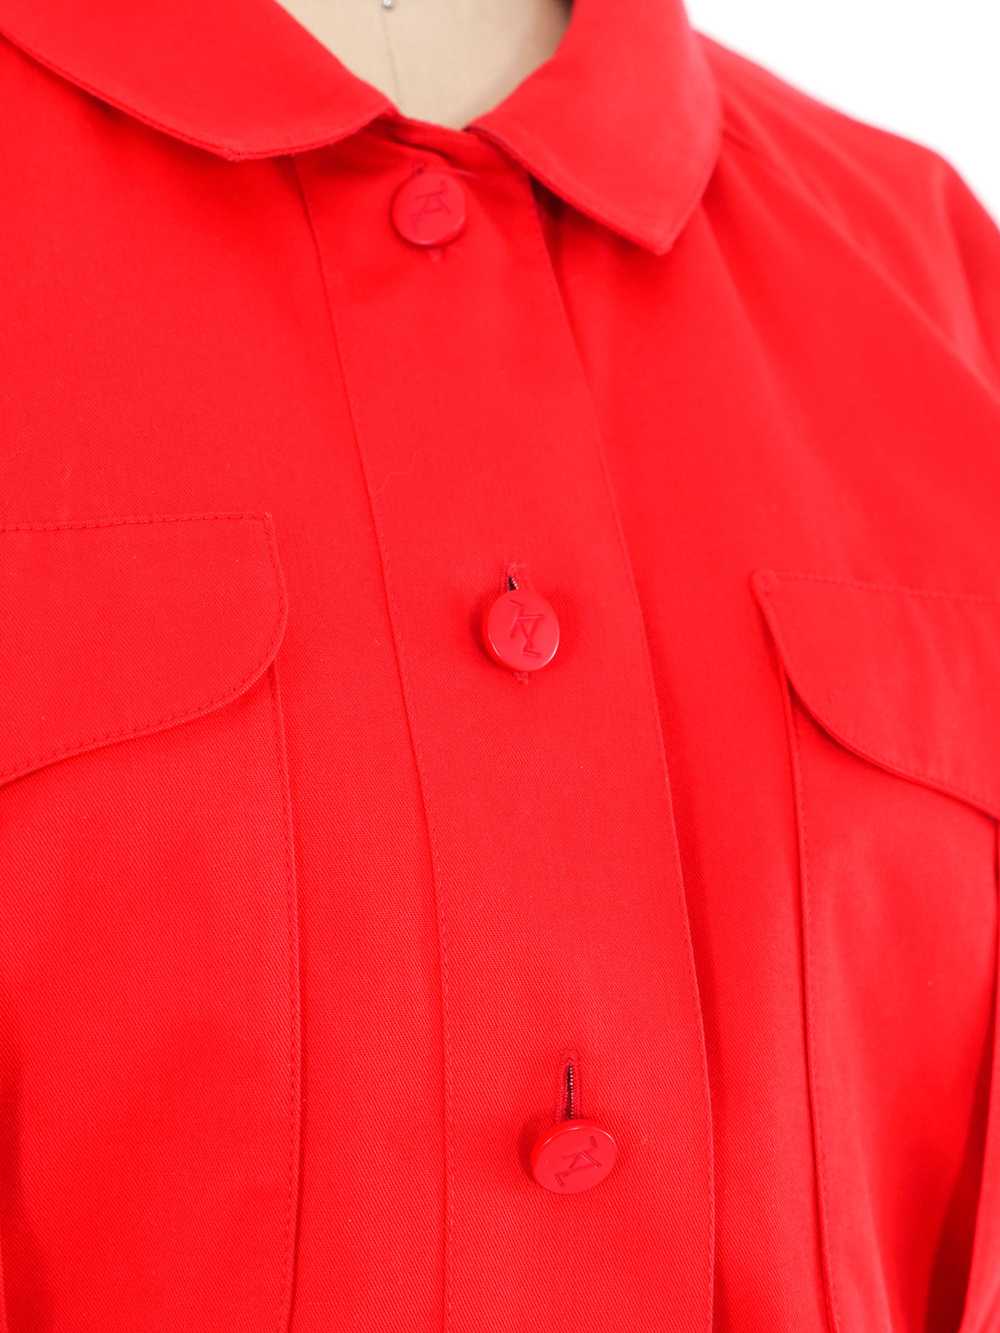 Karl Lagerfeld Red Shirt Dress - image 4